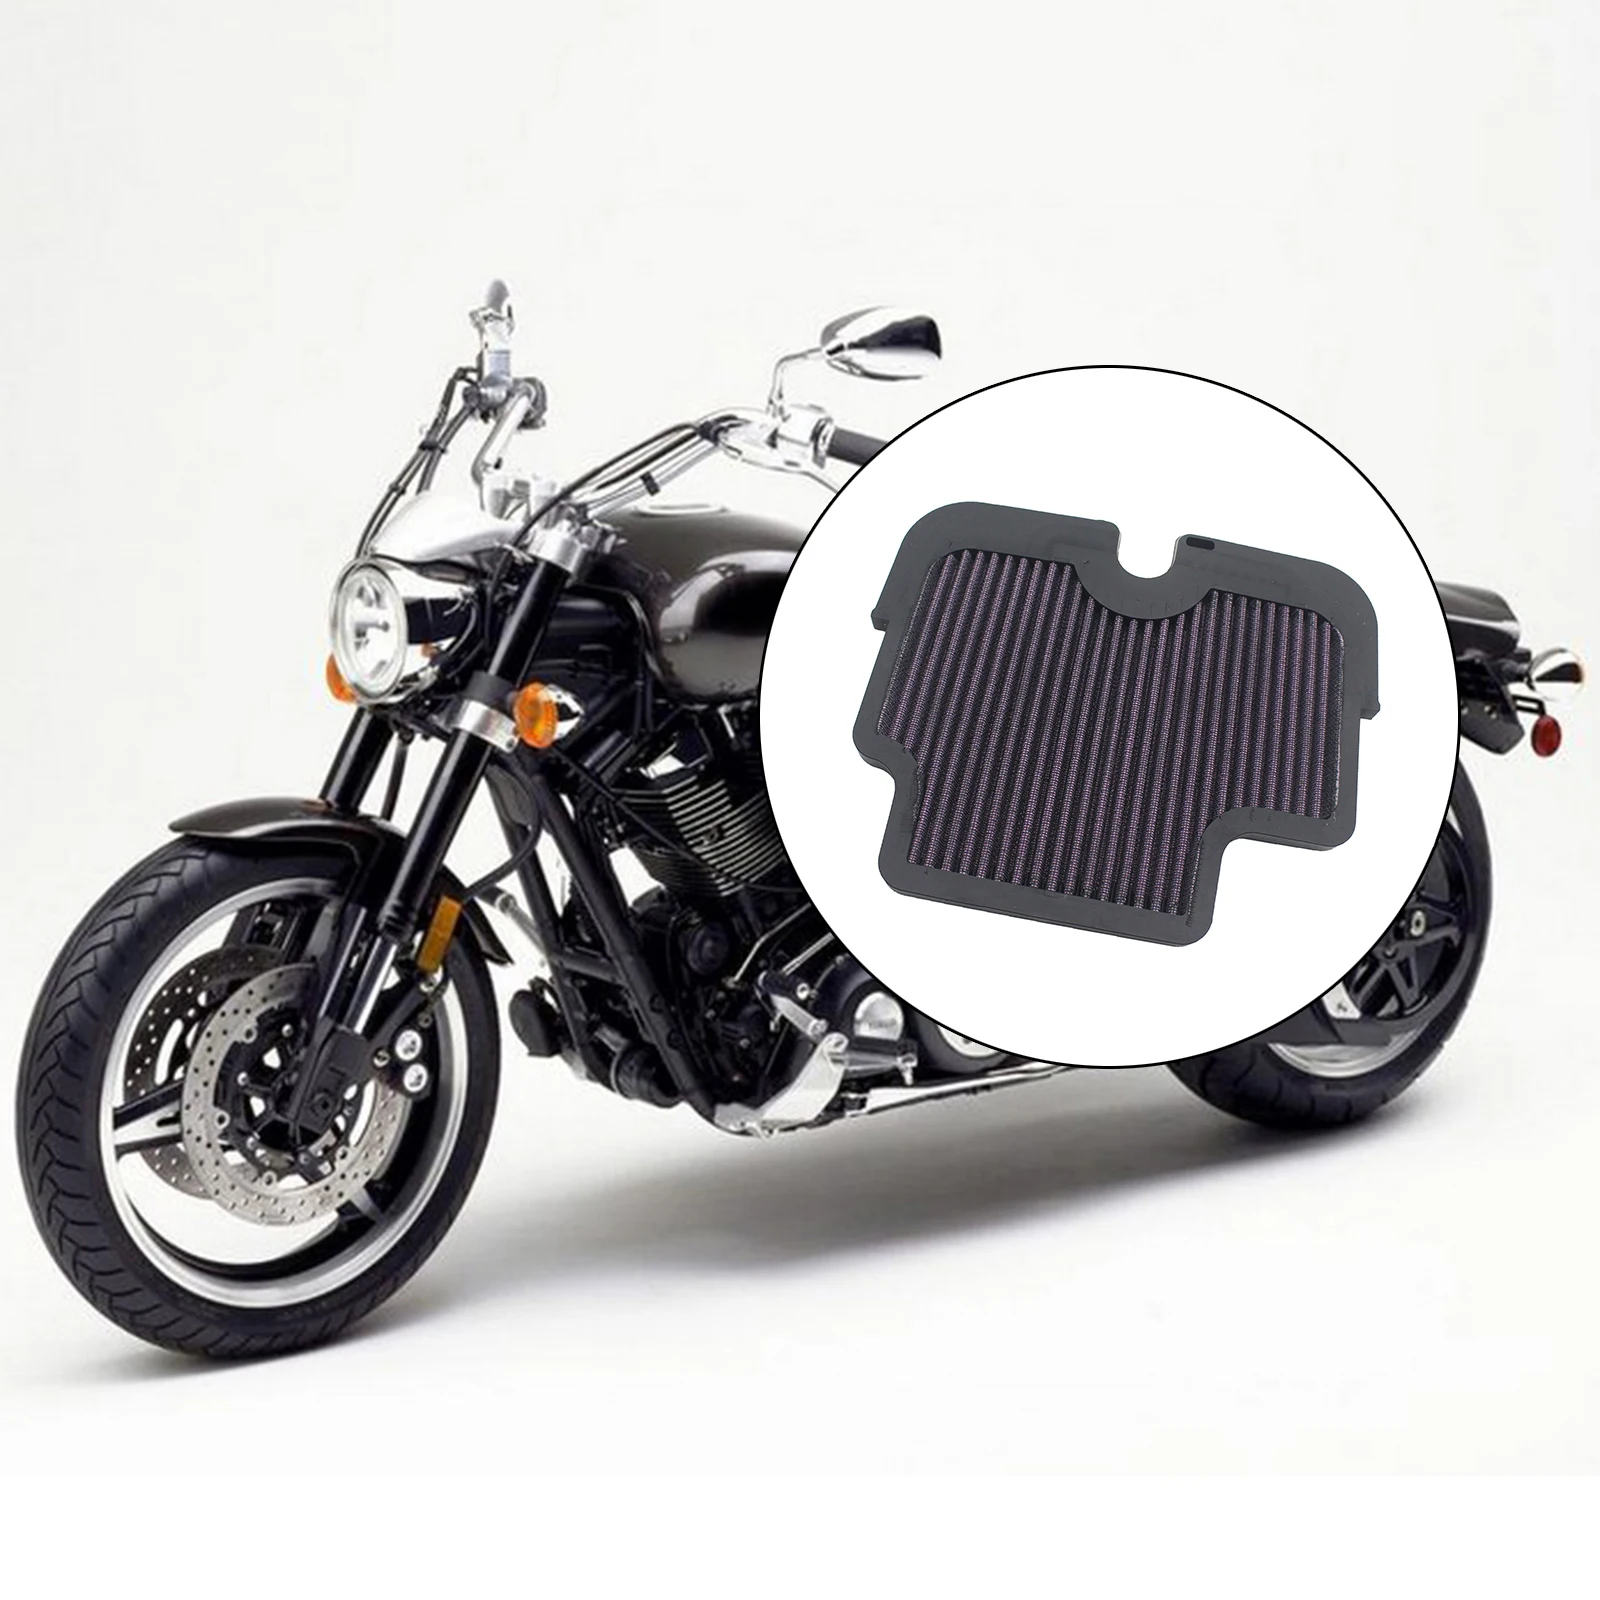 Motorcycle Air Intake Filter Cleaner, Fit for Kawasaki ER650 ER-6N 2009-2011 Motorbike Replace Accessories